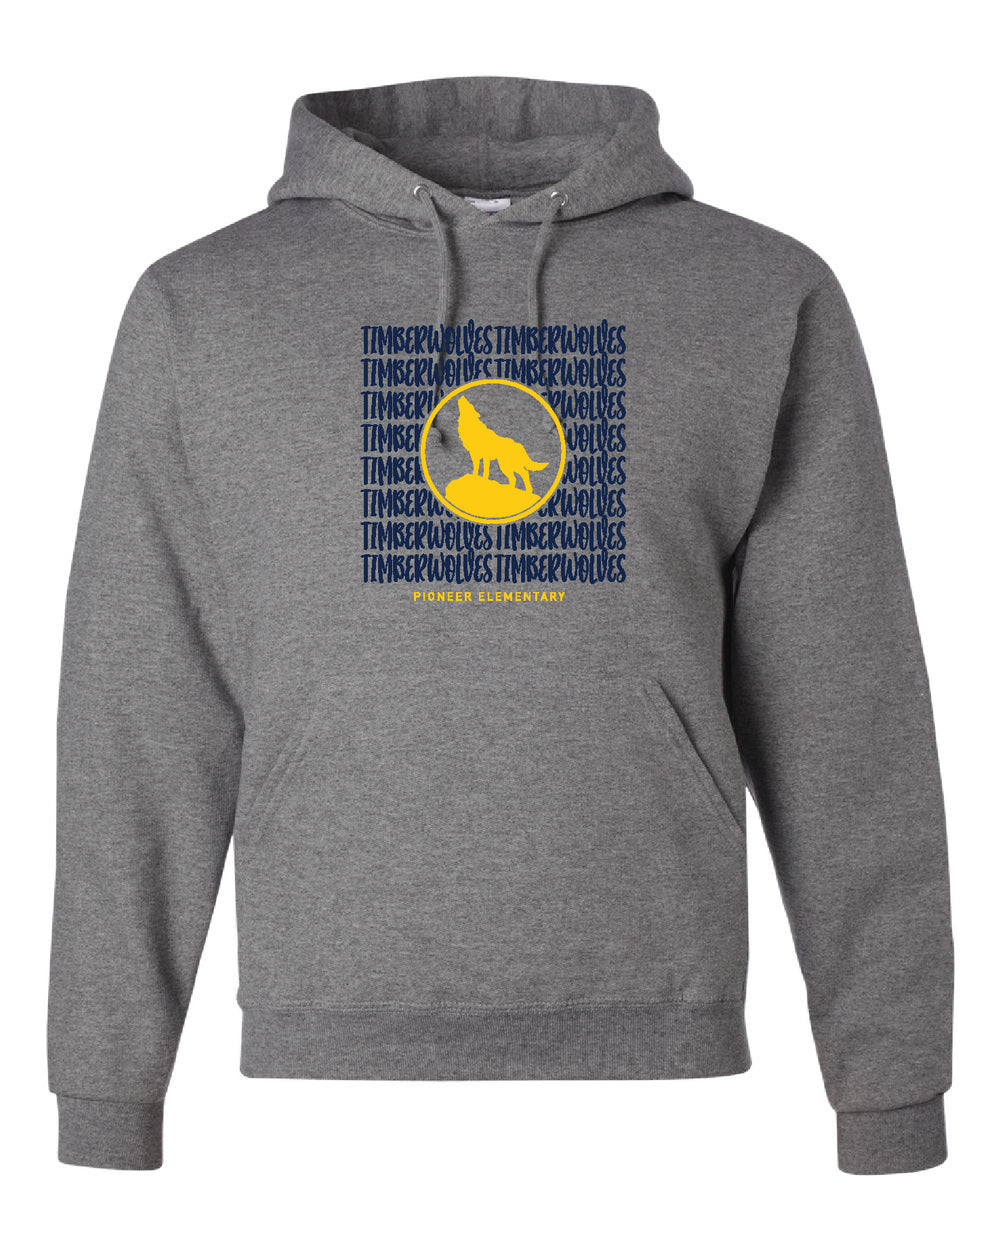 Hooded Sweatshirt - Timberwolves